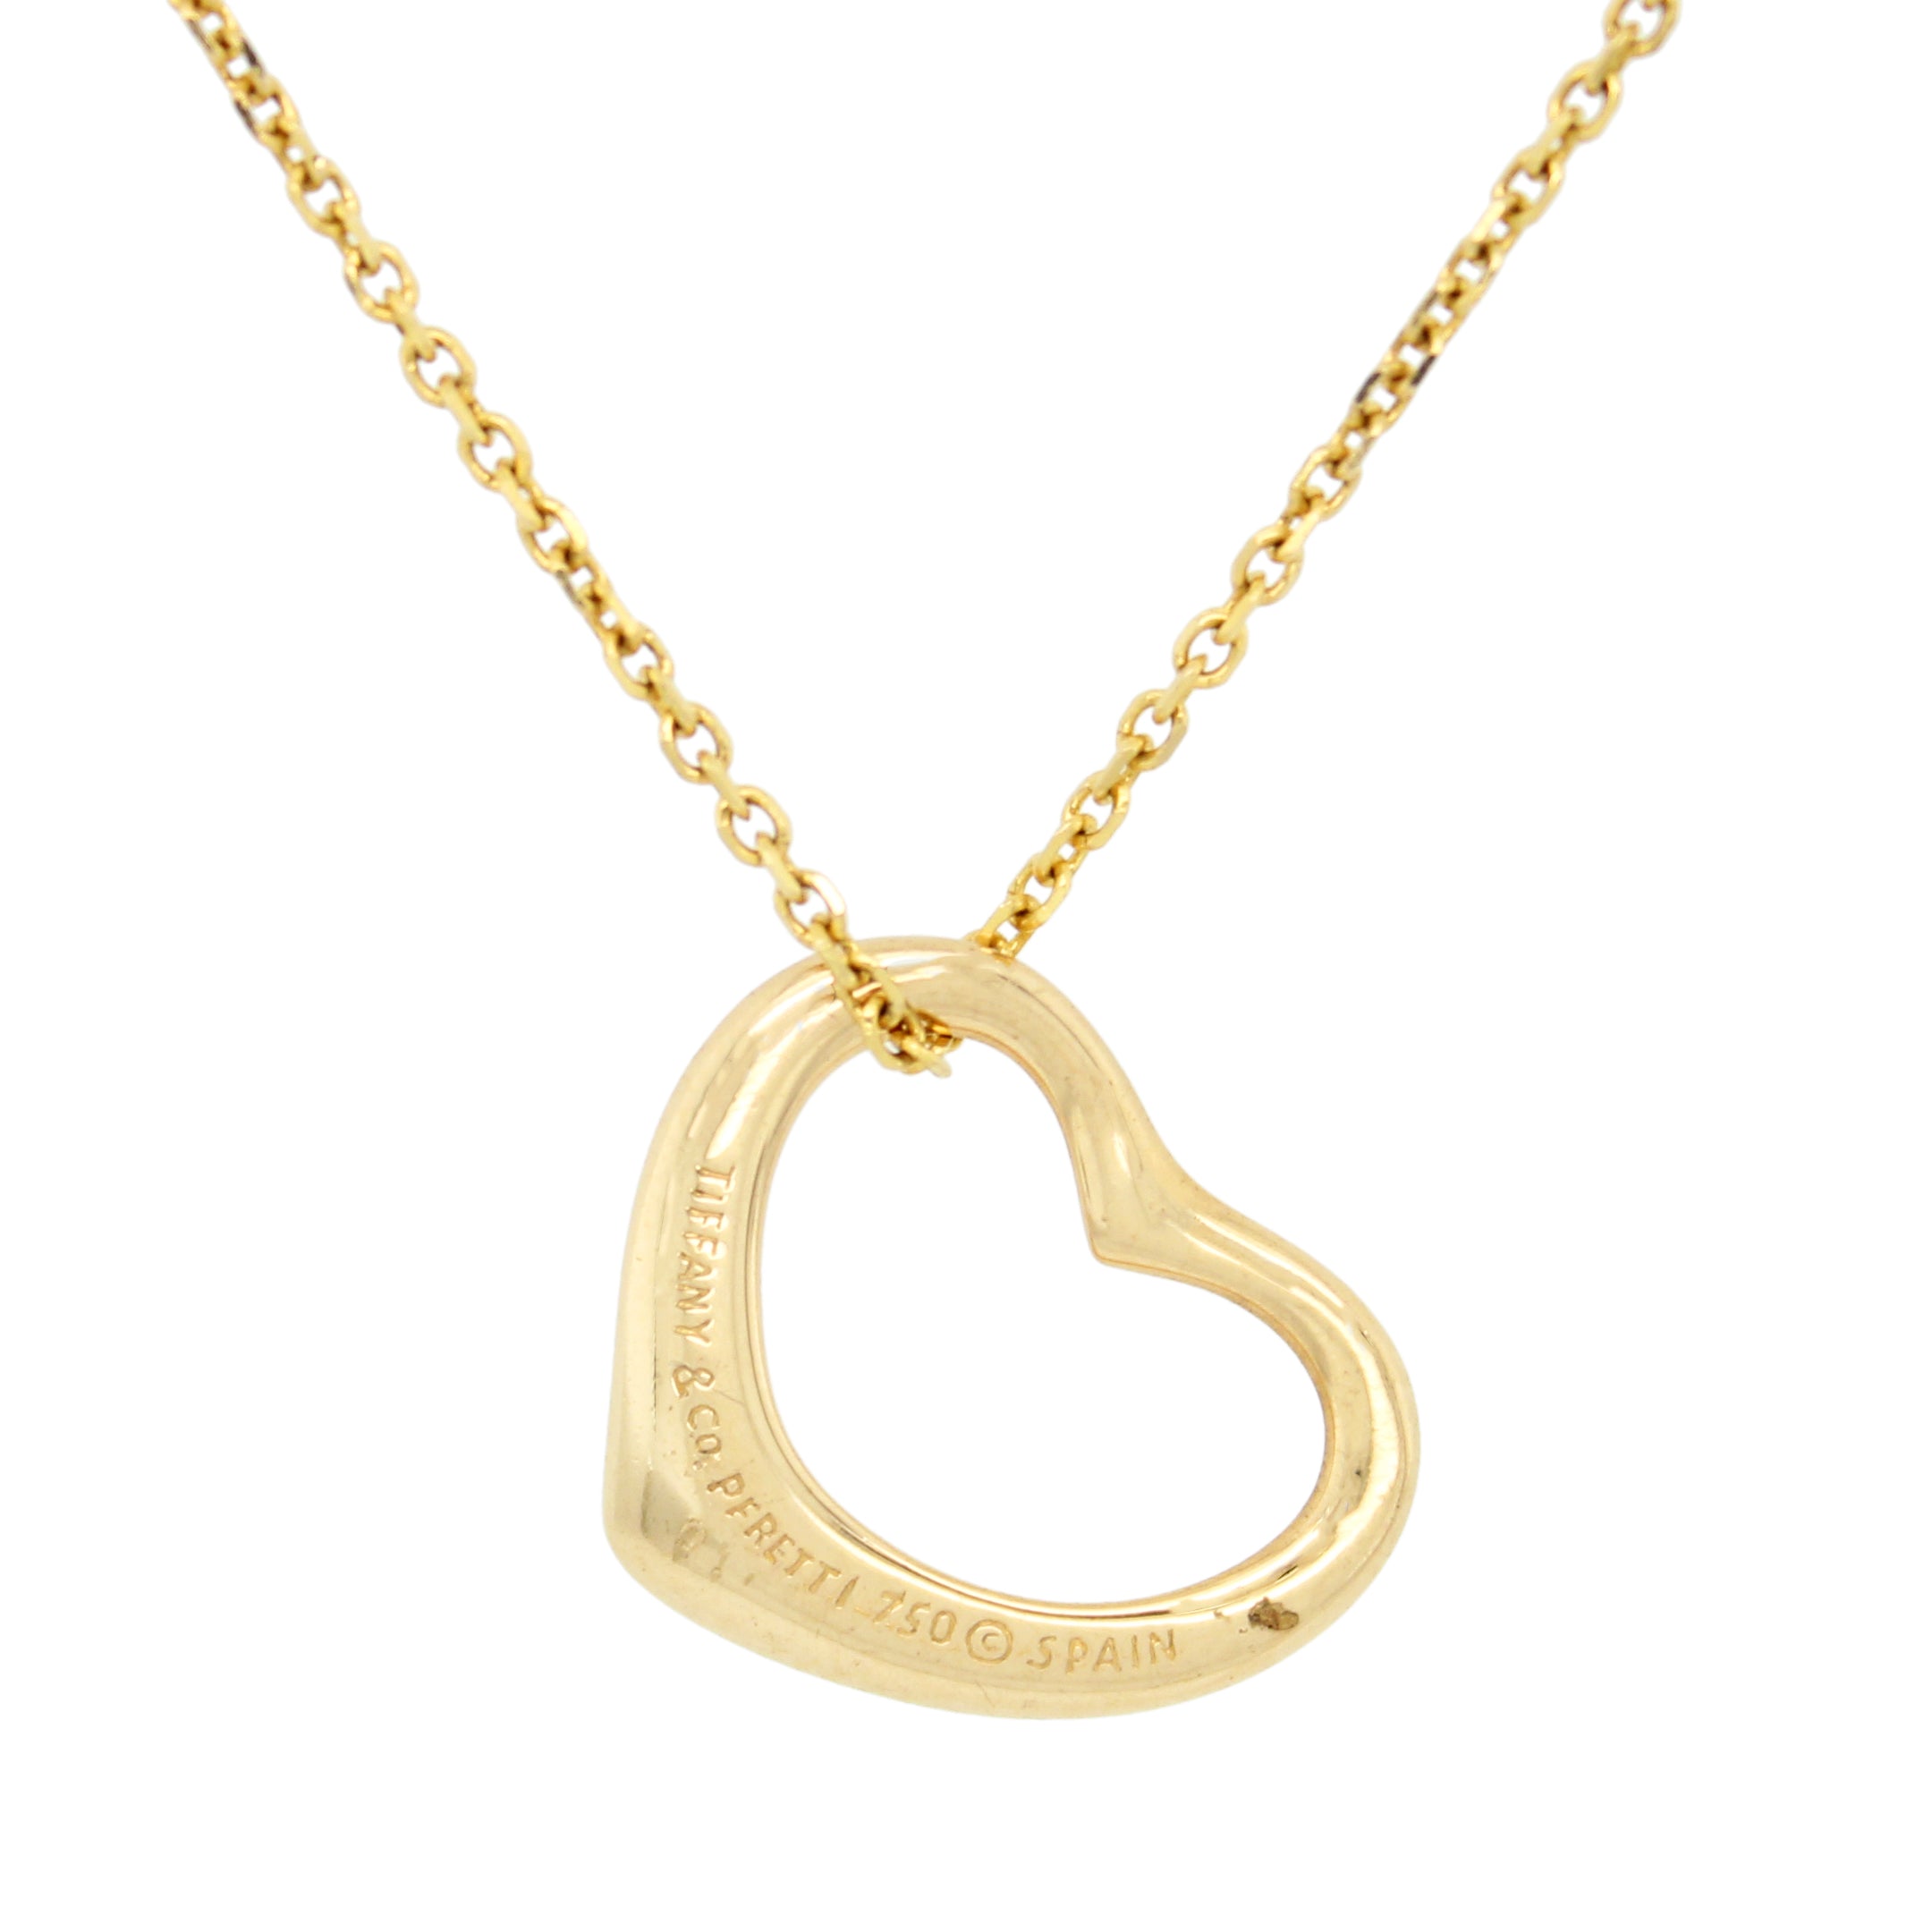 Tiffany & Co. Elsa Peretti Open Heart Pendant in 18k Yellow Gold - 18" Necklace